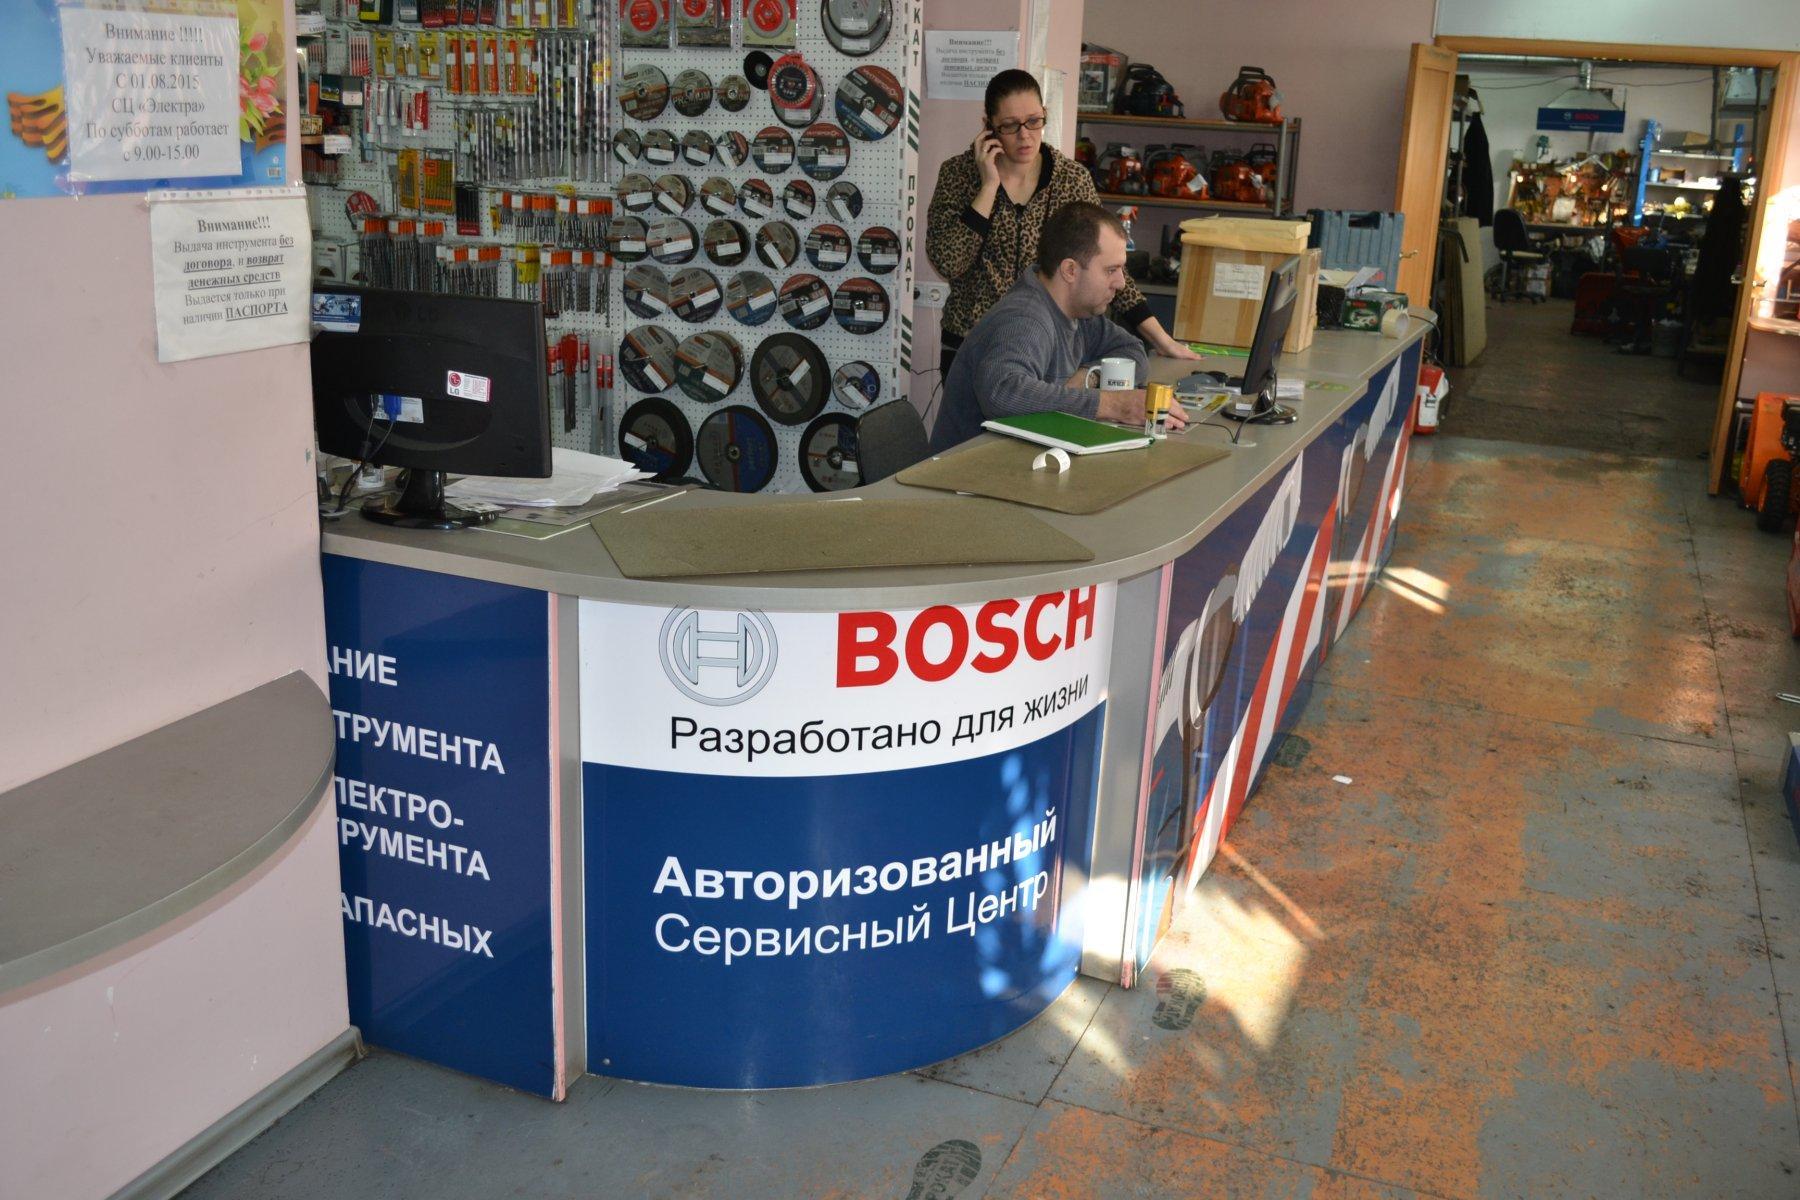 Бош центр телефон. Bosch сервис Россия. Авторизованный сервисный центр Bosch. Бош сервис Нижний. Сервисный сайт бош.